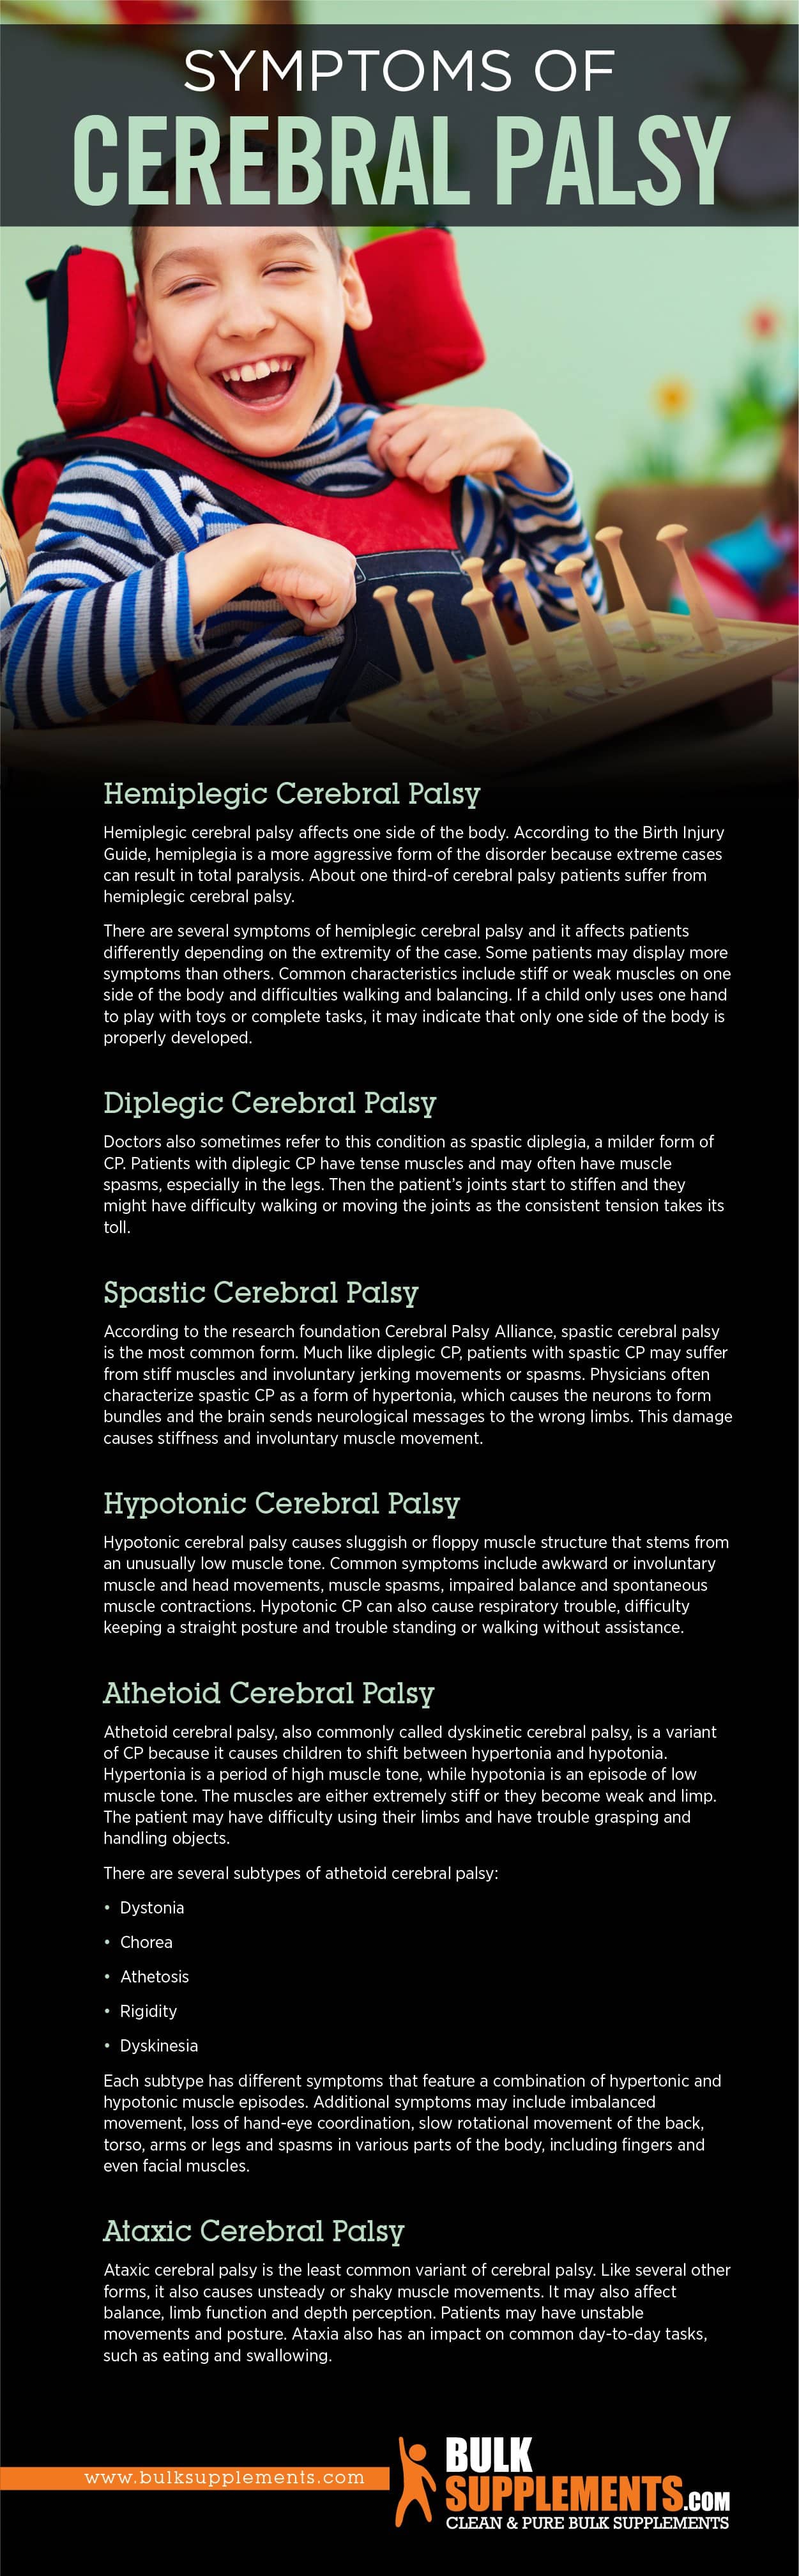 Symptoms of Cerebral Palsy